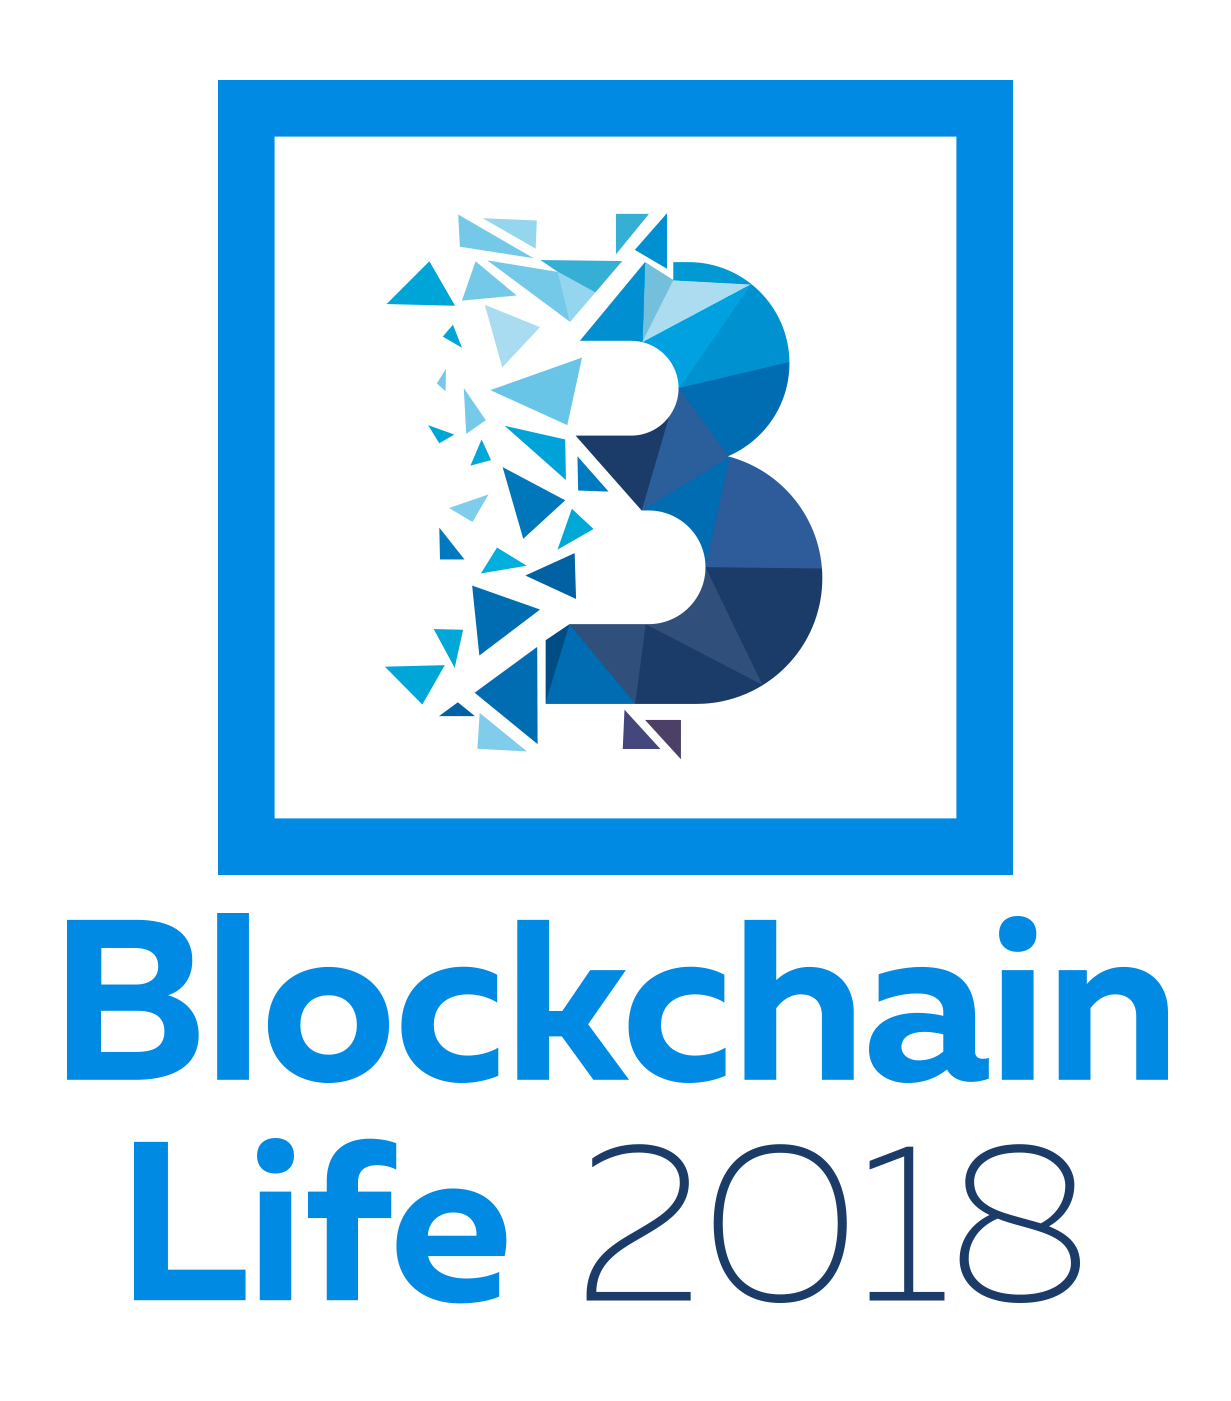 Blockchain Life 2018